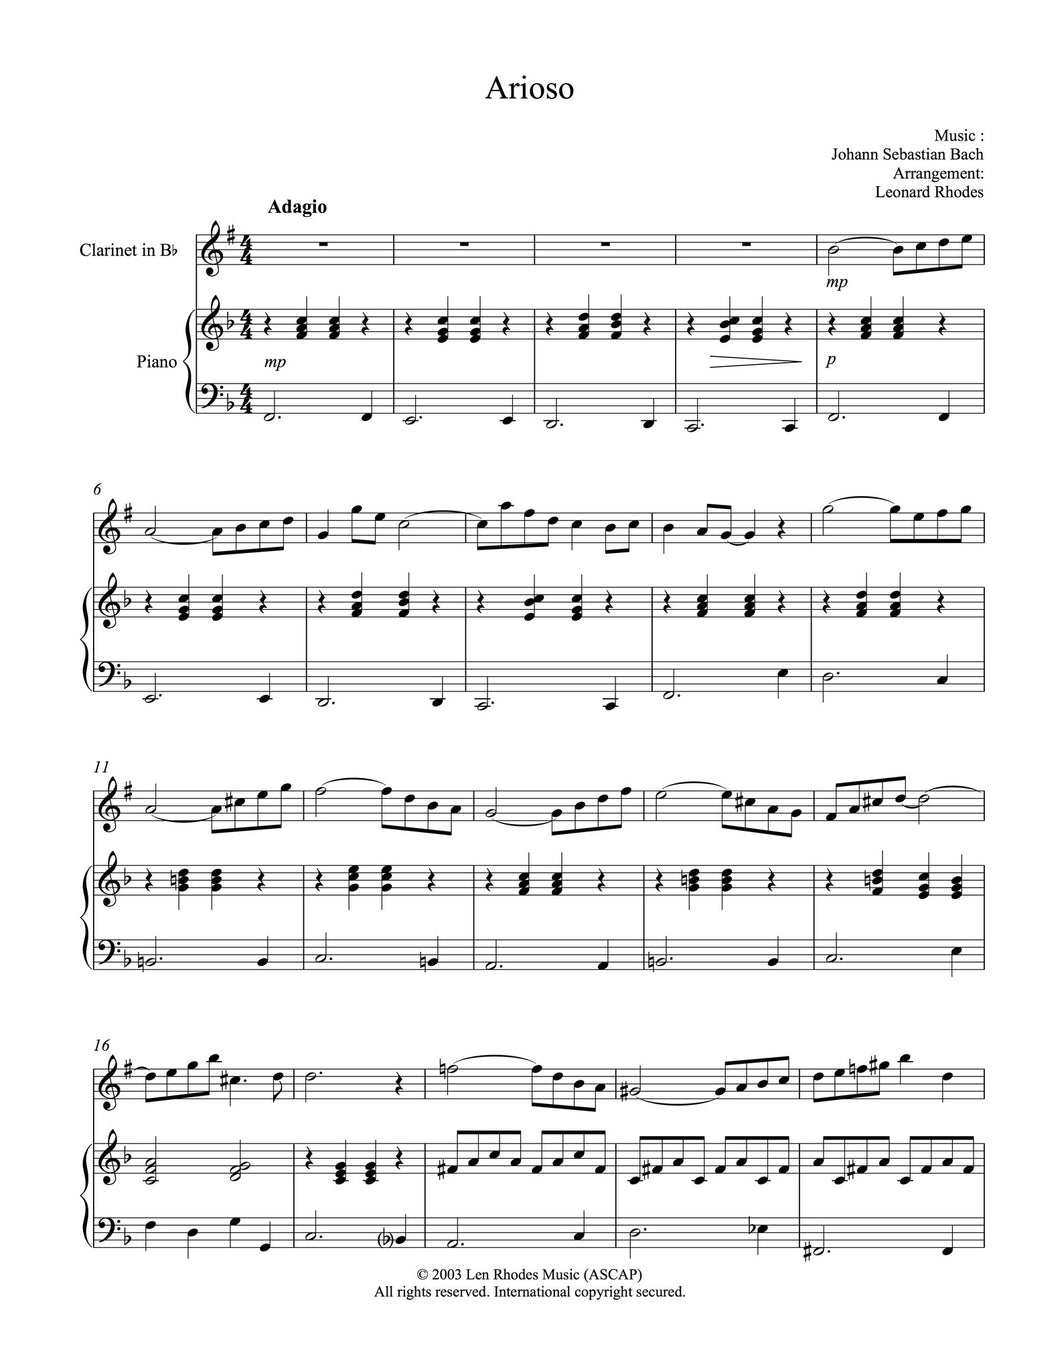 Arioso, Bach -  Clarinet and Piano